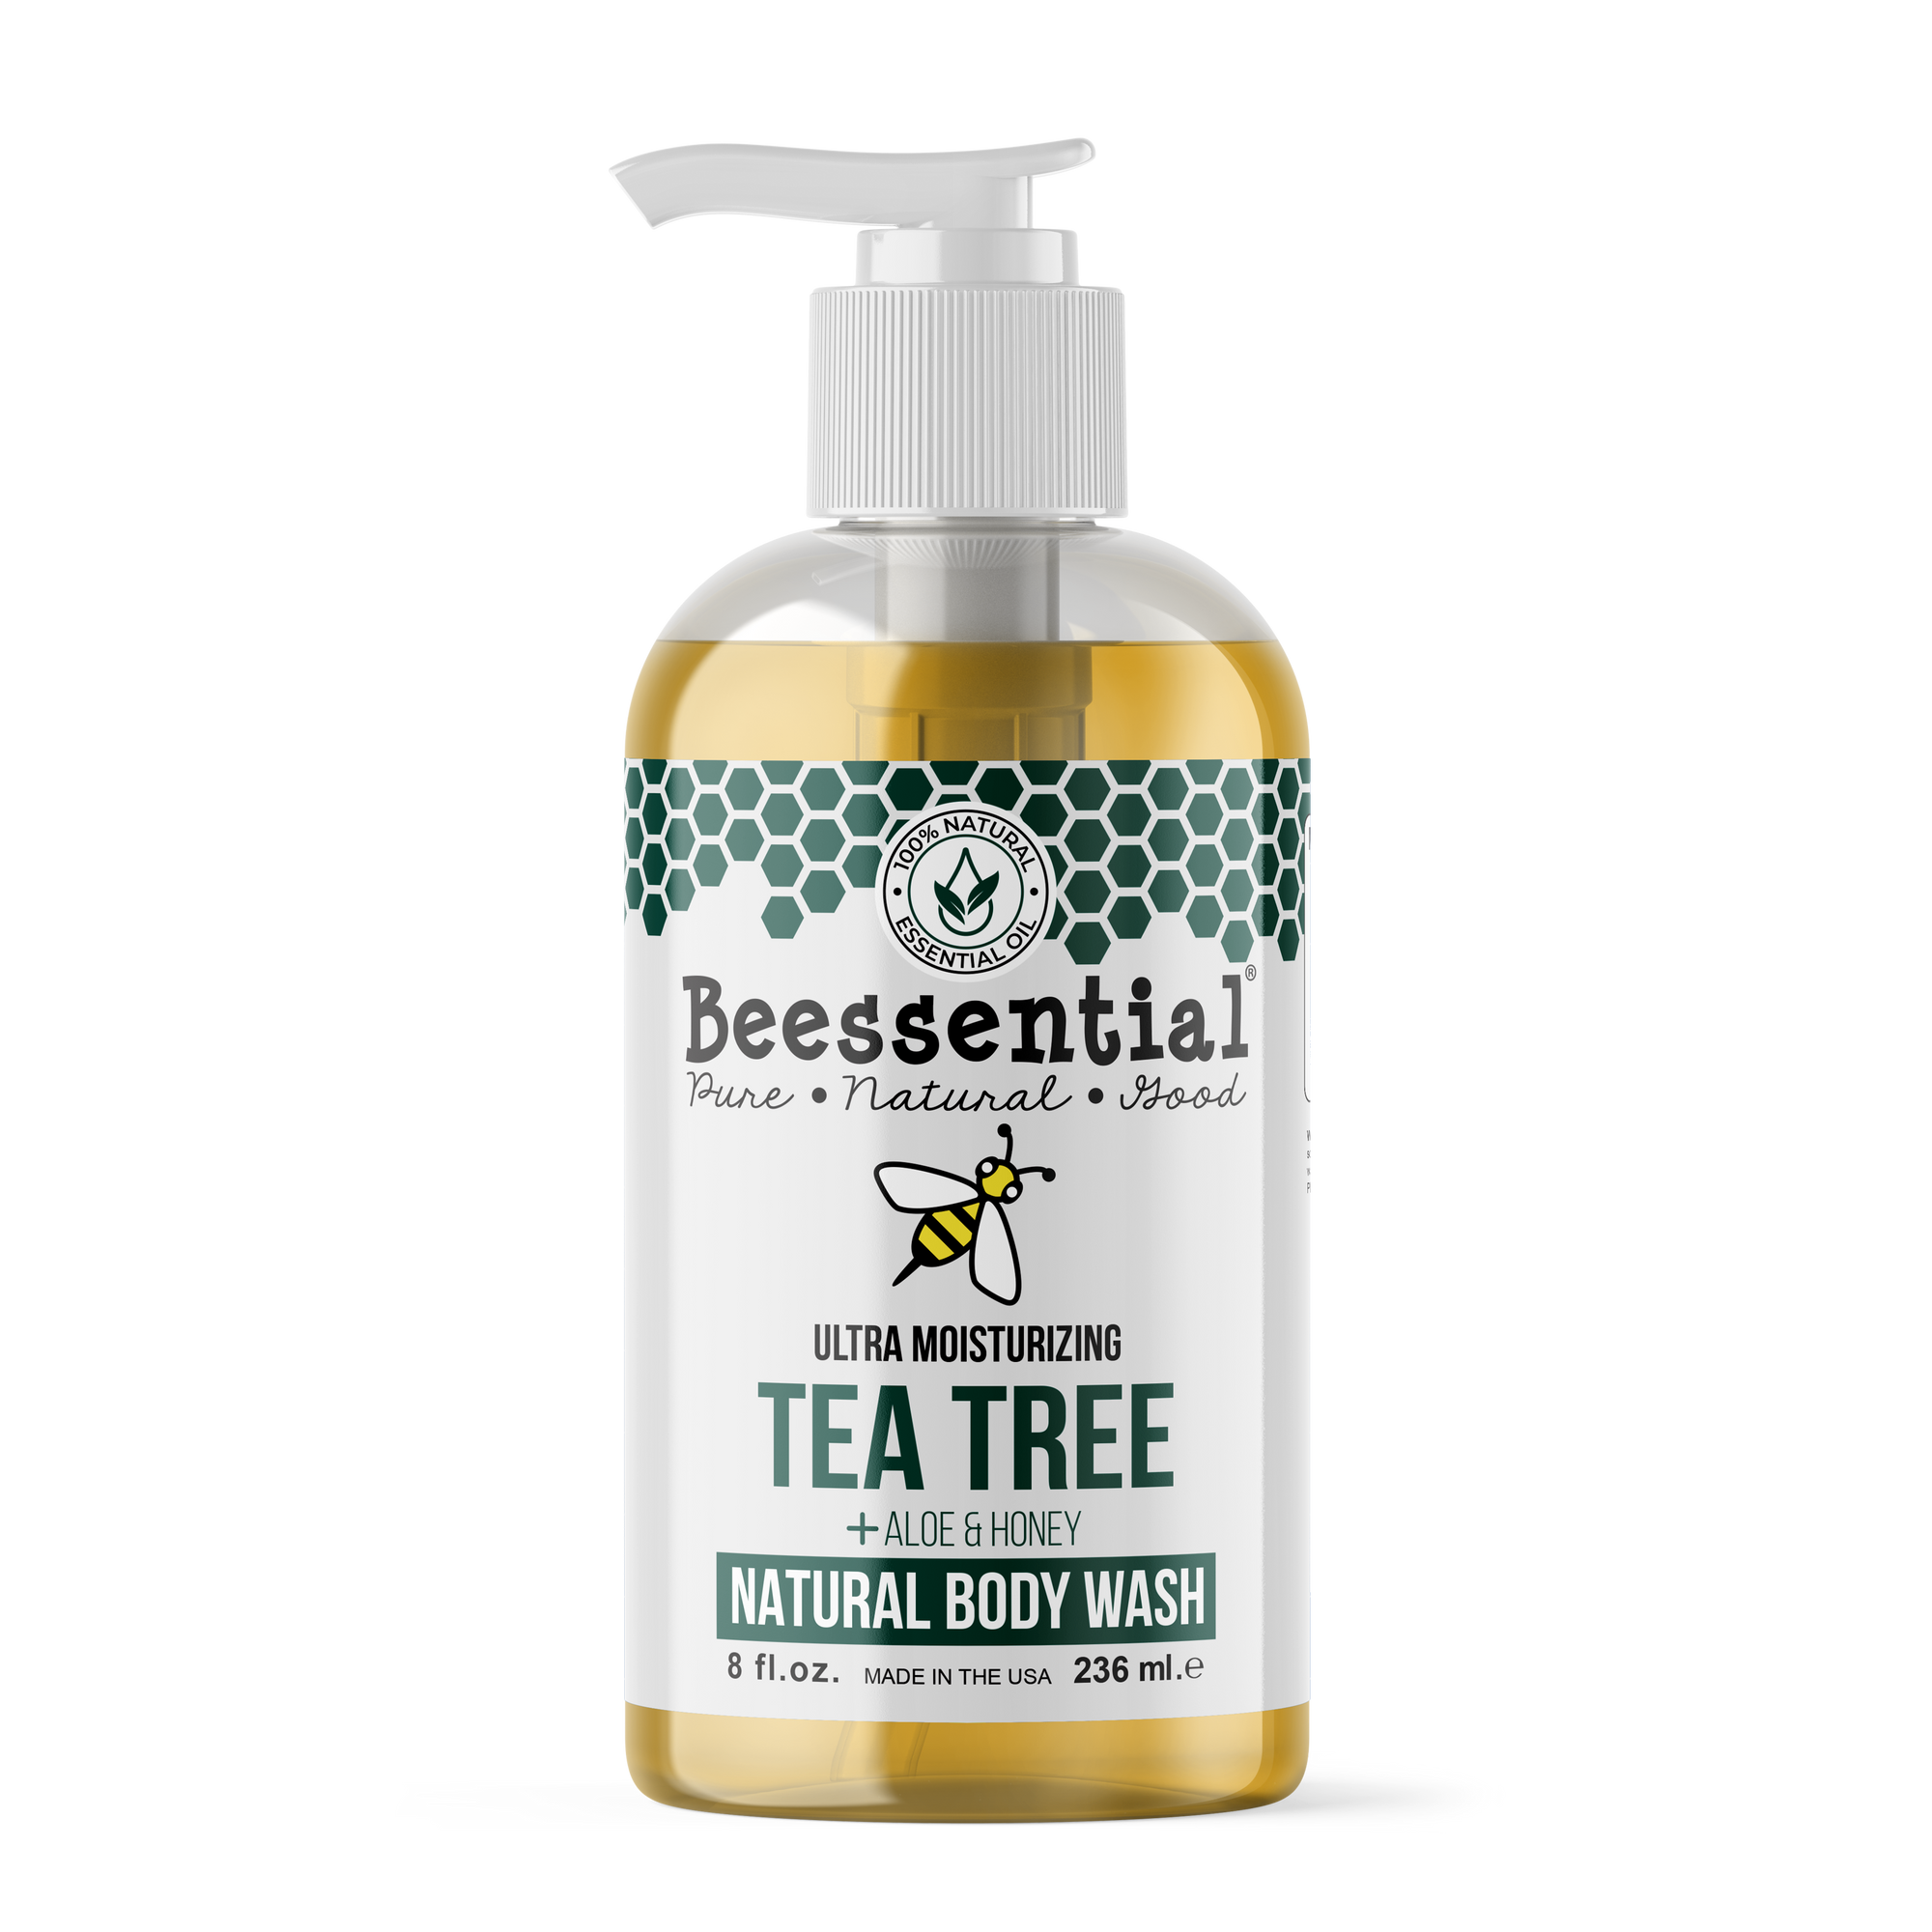 Tea Tree Body Wash